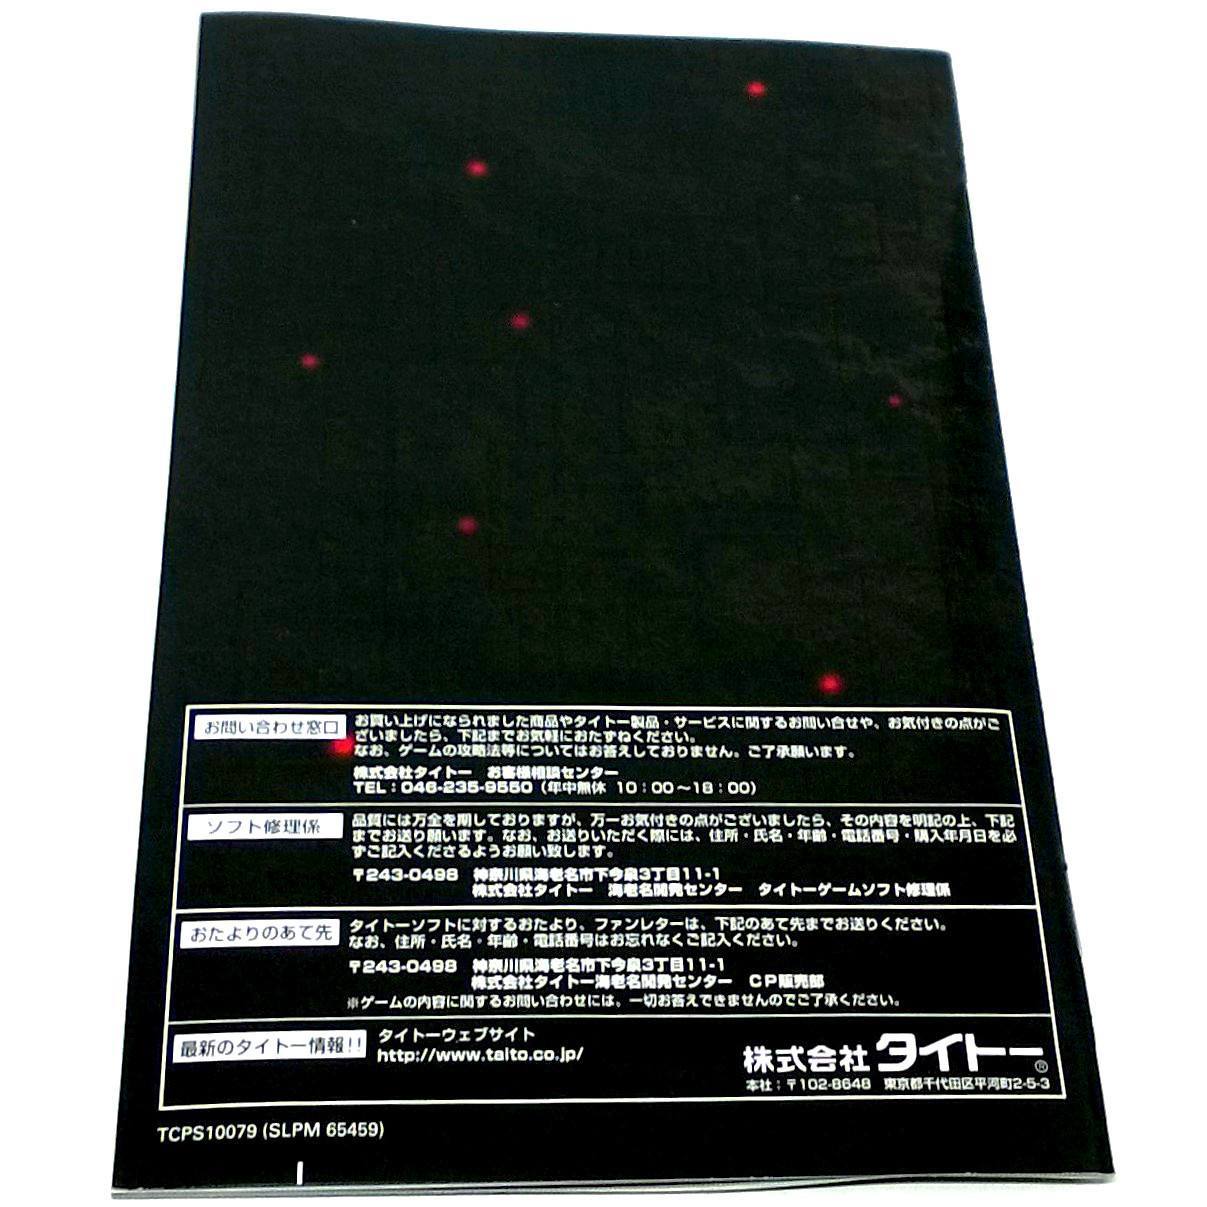 Bujingai for PlayStation 2 (Import) - Back of manual